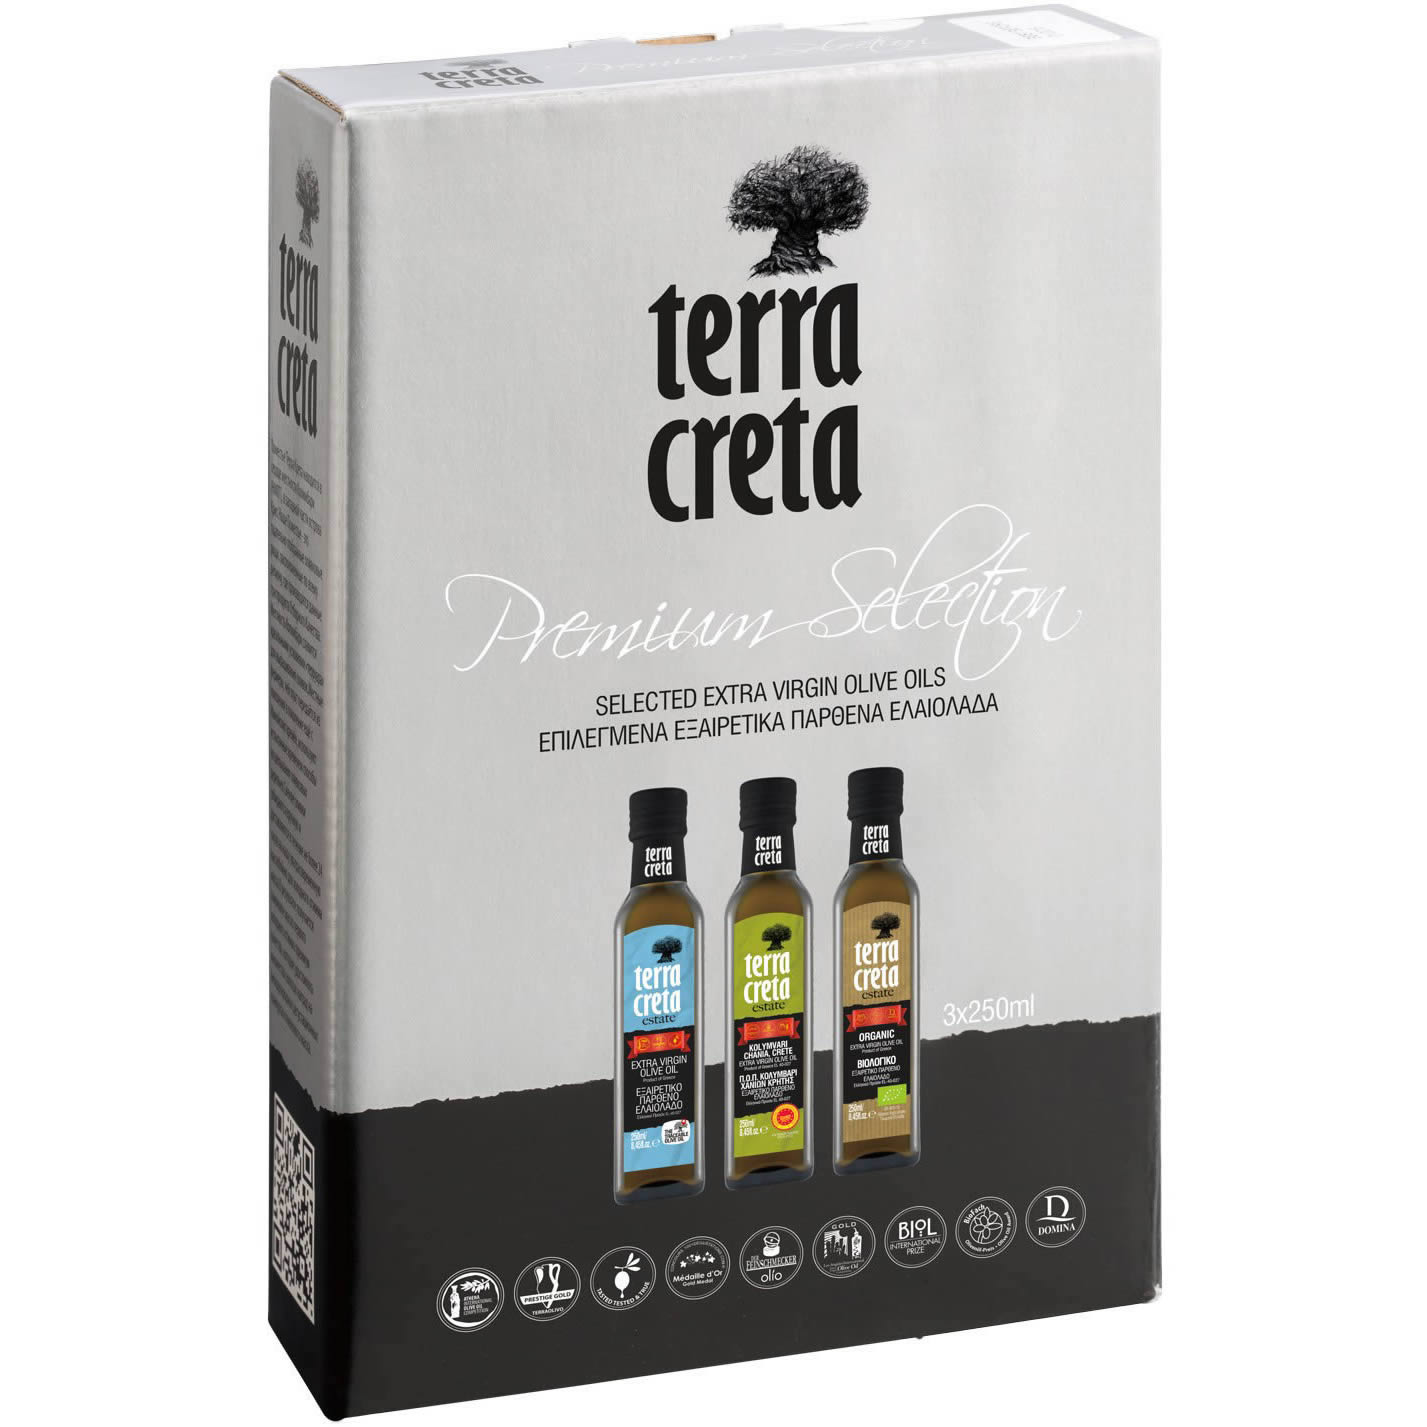 Terra Creta - Extra natives Olivenöl "Premium Selection" 3 x 250 ml